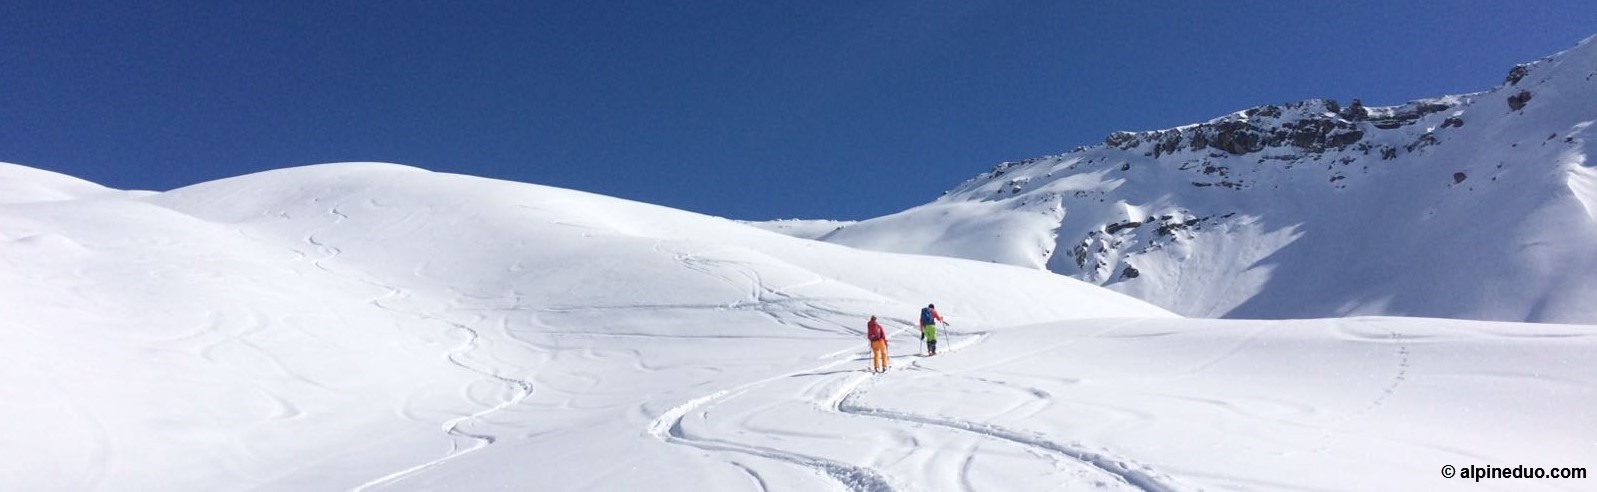 Blog: skitour